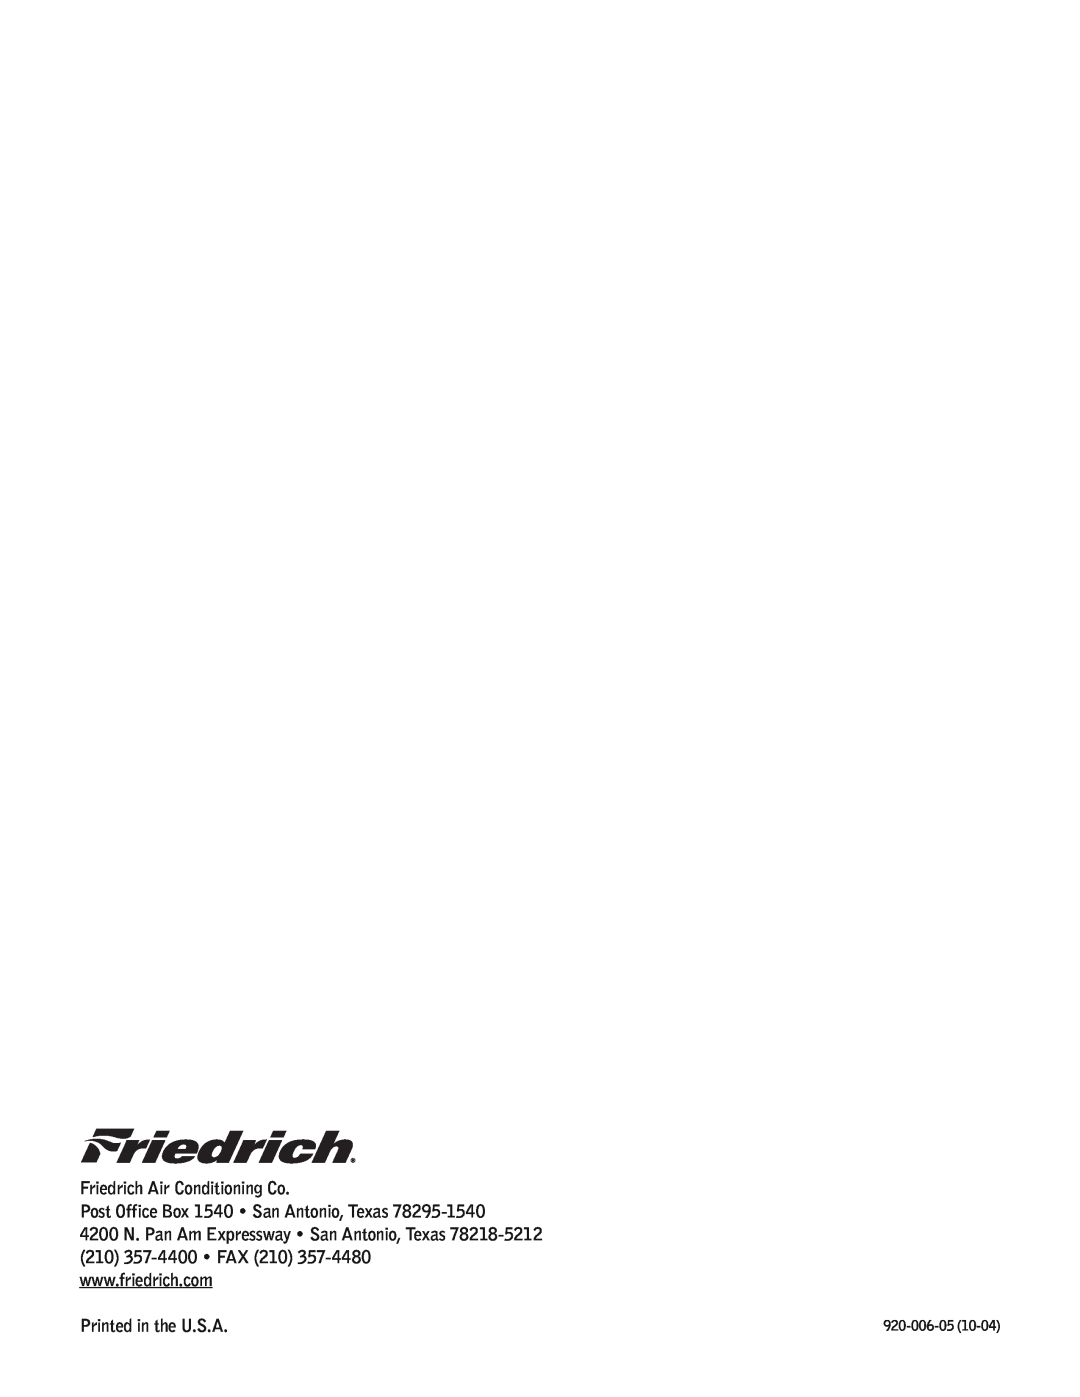 Friedrich SC06 manual Friedrich Air Conditioning Co, Post Office Box 1540 San Antonio, Texas, 920-006-05 